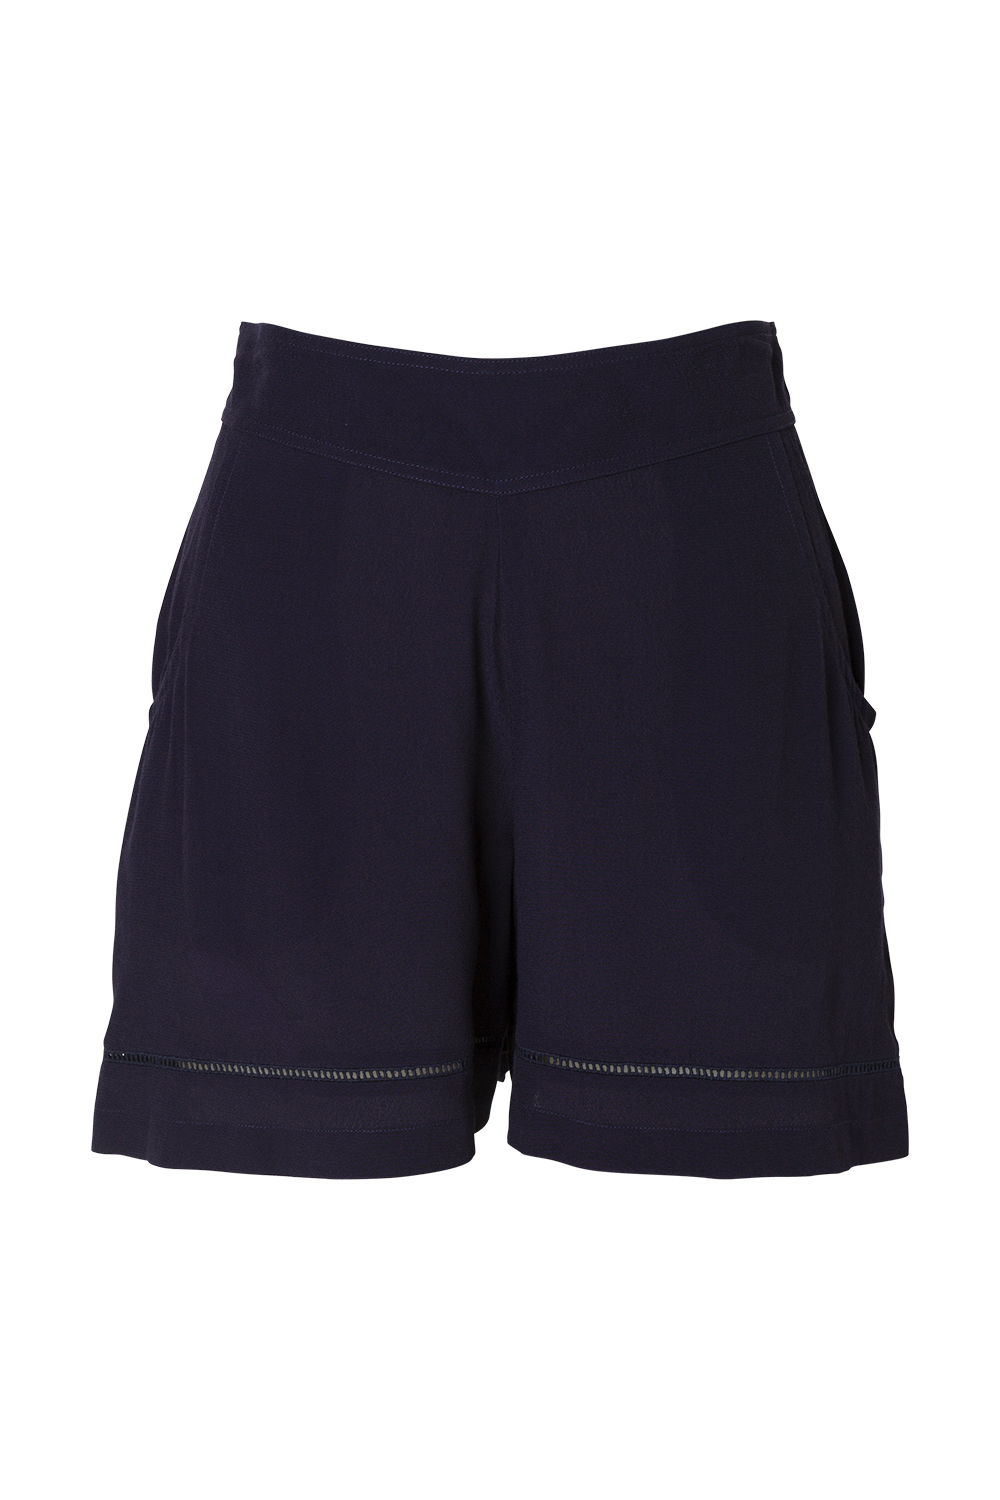 Shorts, $139, by Random.